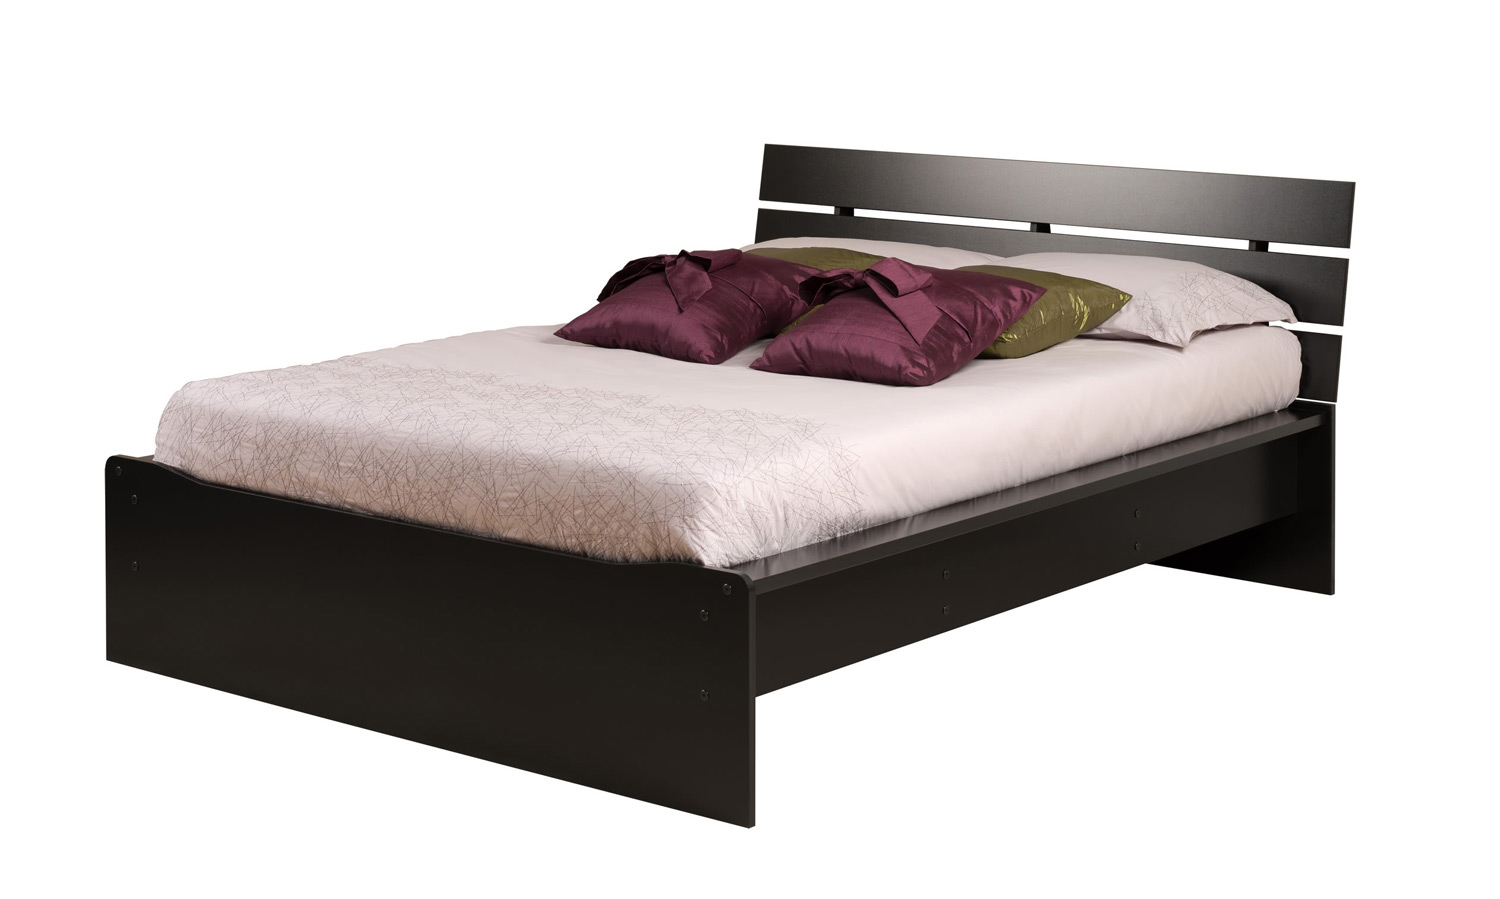 Prepac Avanti Platform Bed with Integrated Headboard - Black